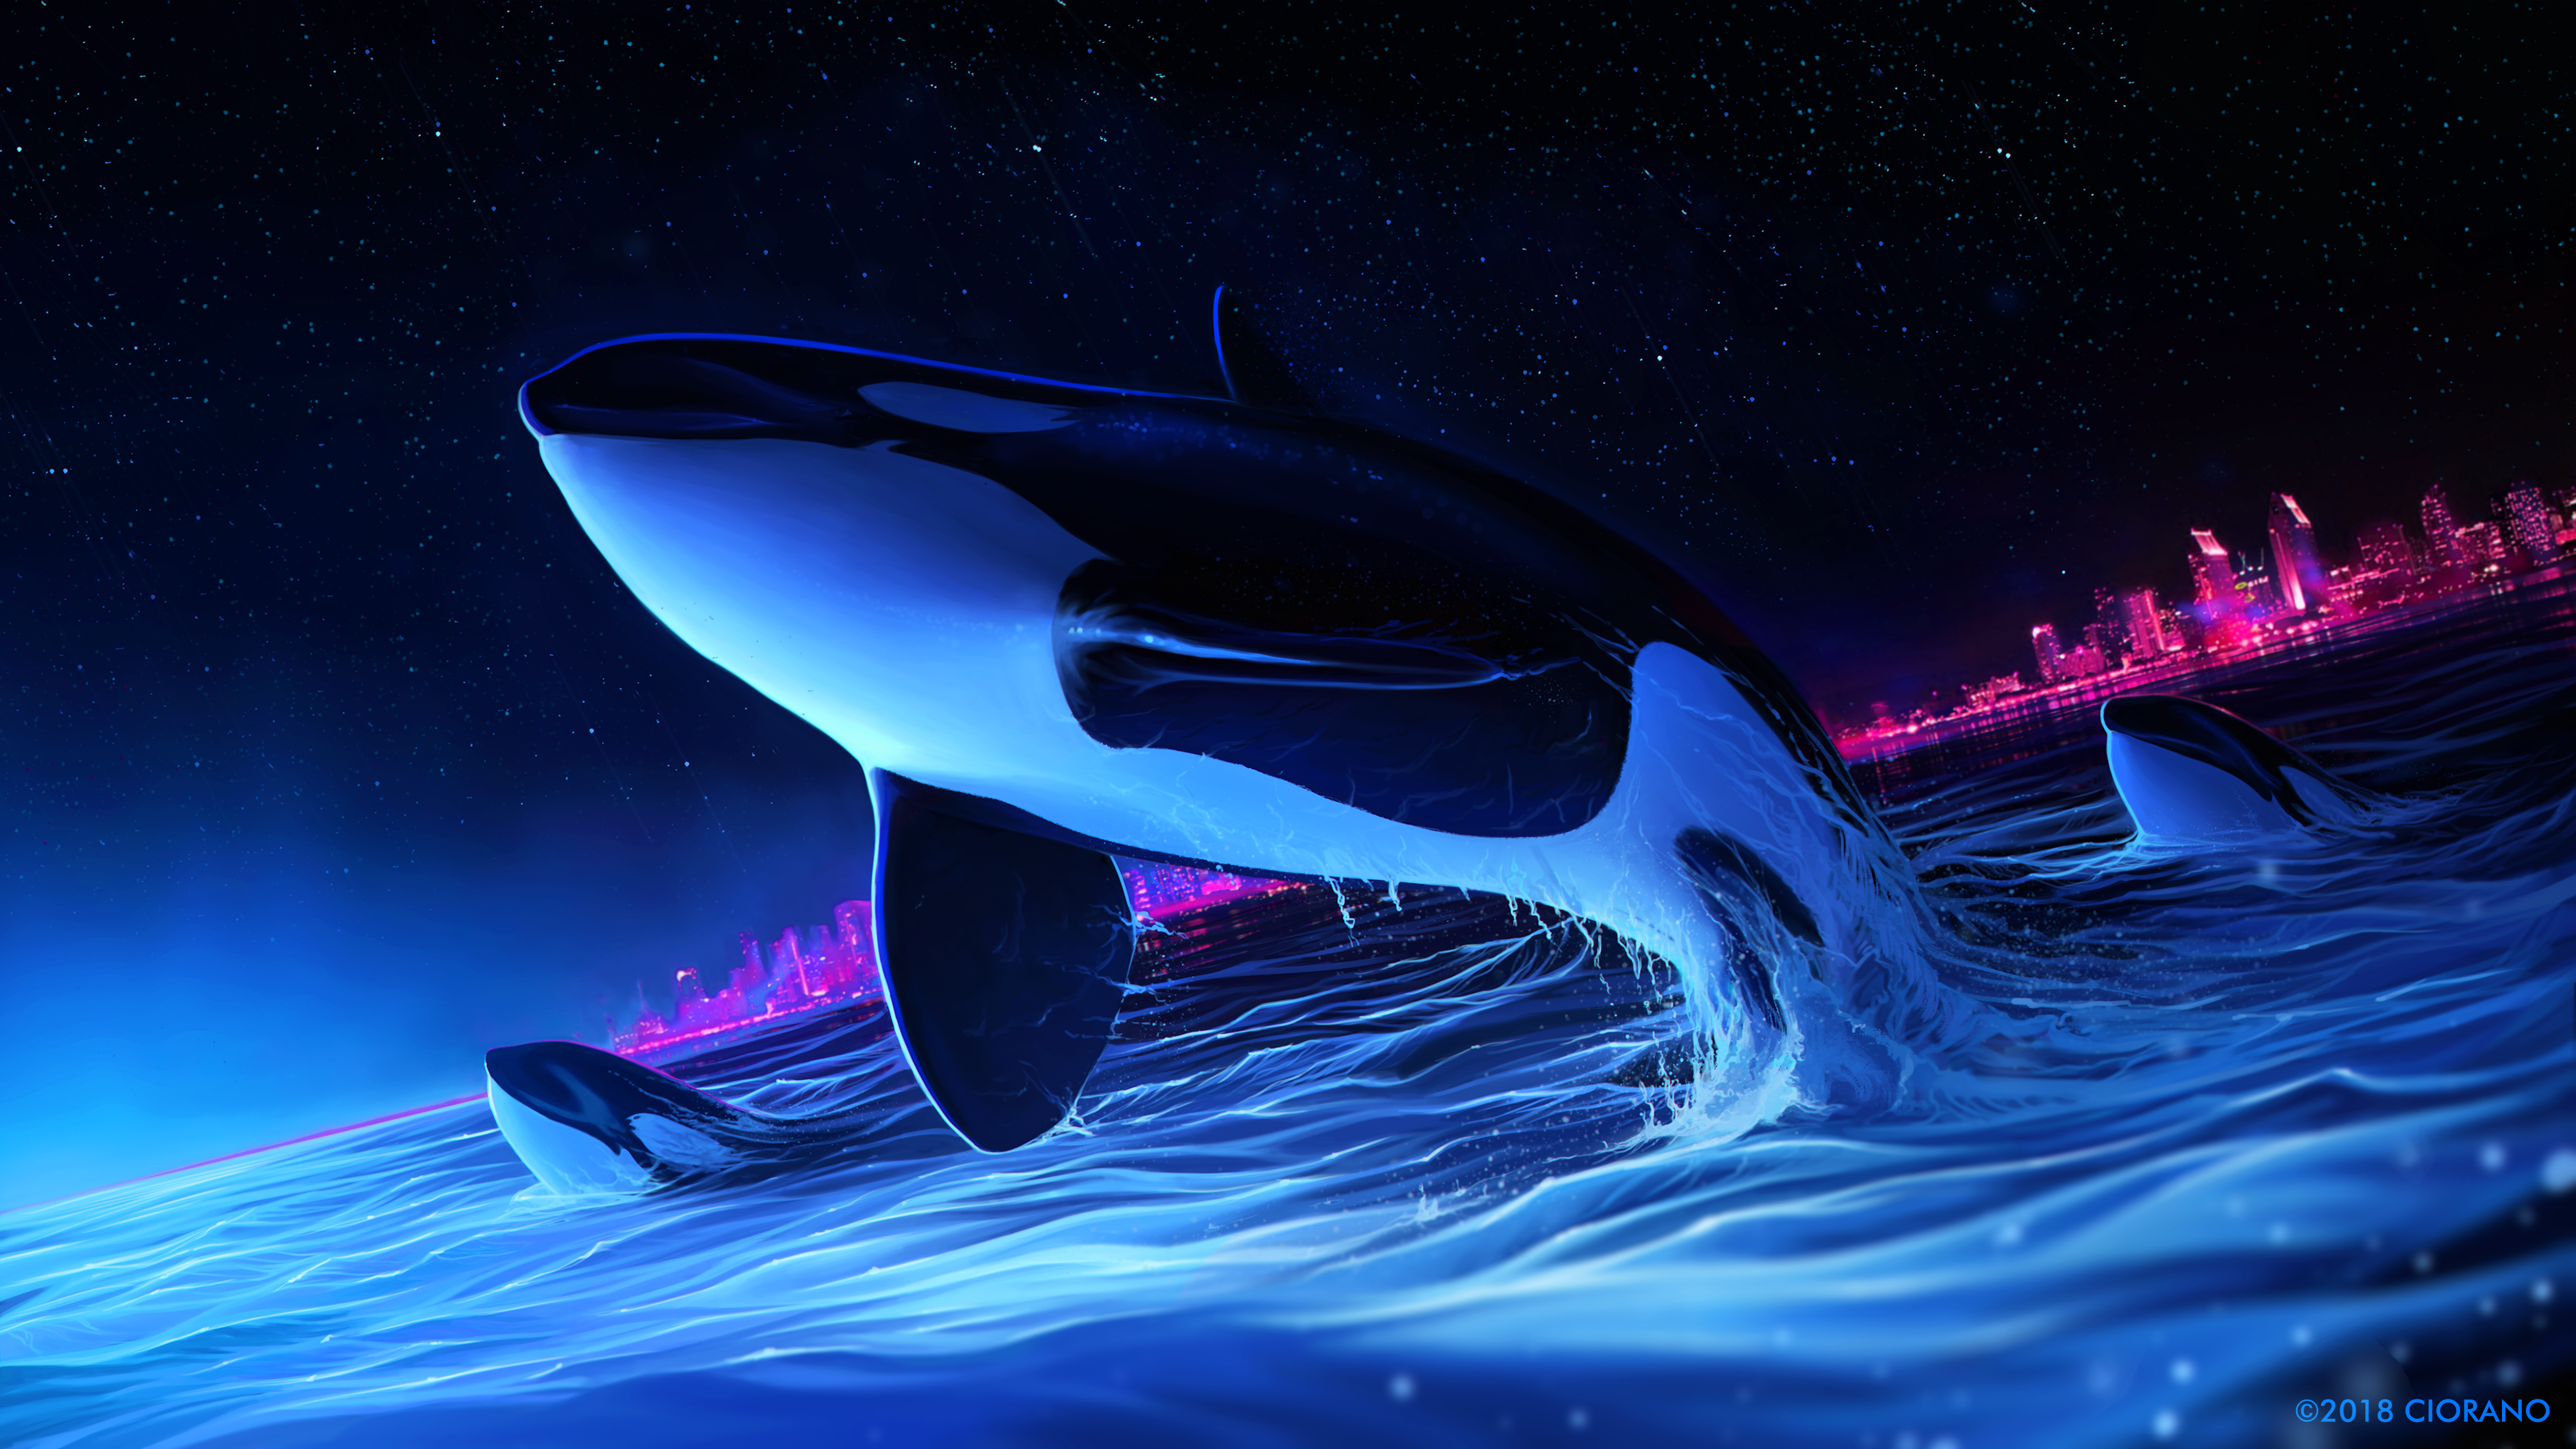 Digital Digital Art Artwork Illustration Drawing Digital Painting Animals Whale Orca Night Sky Night 4000x2250